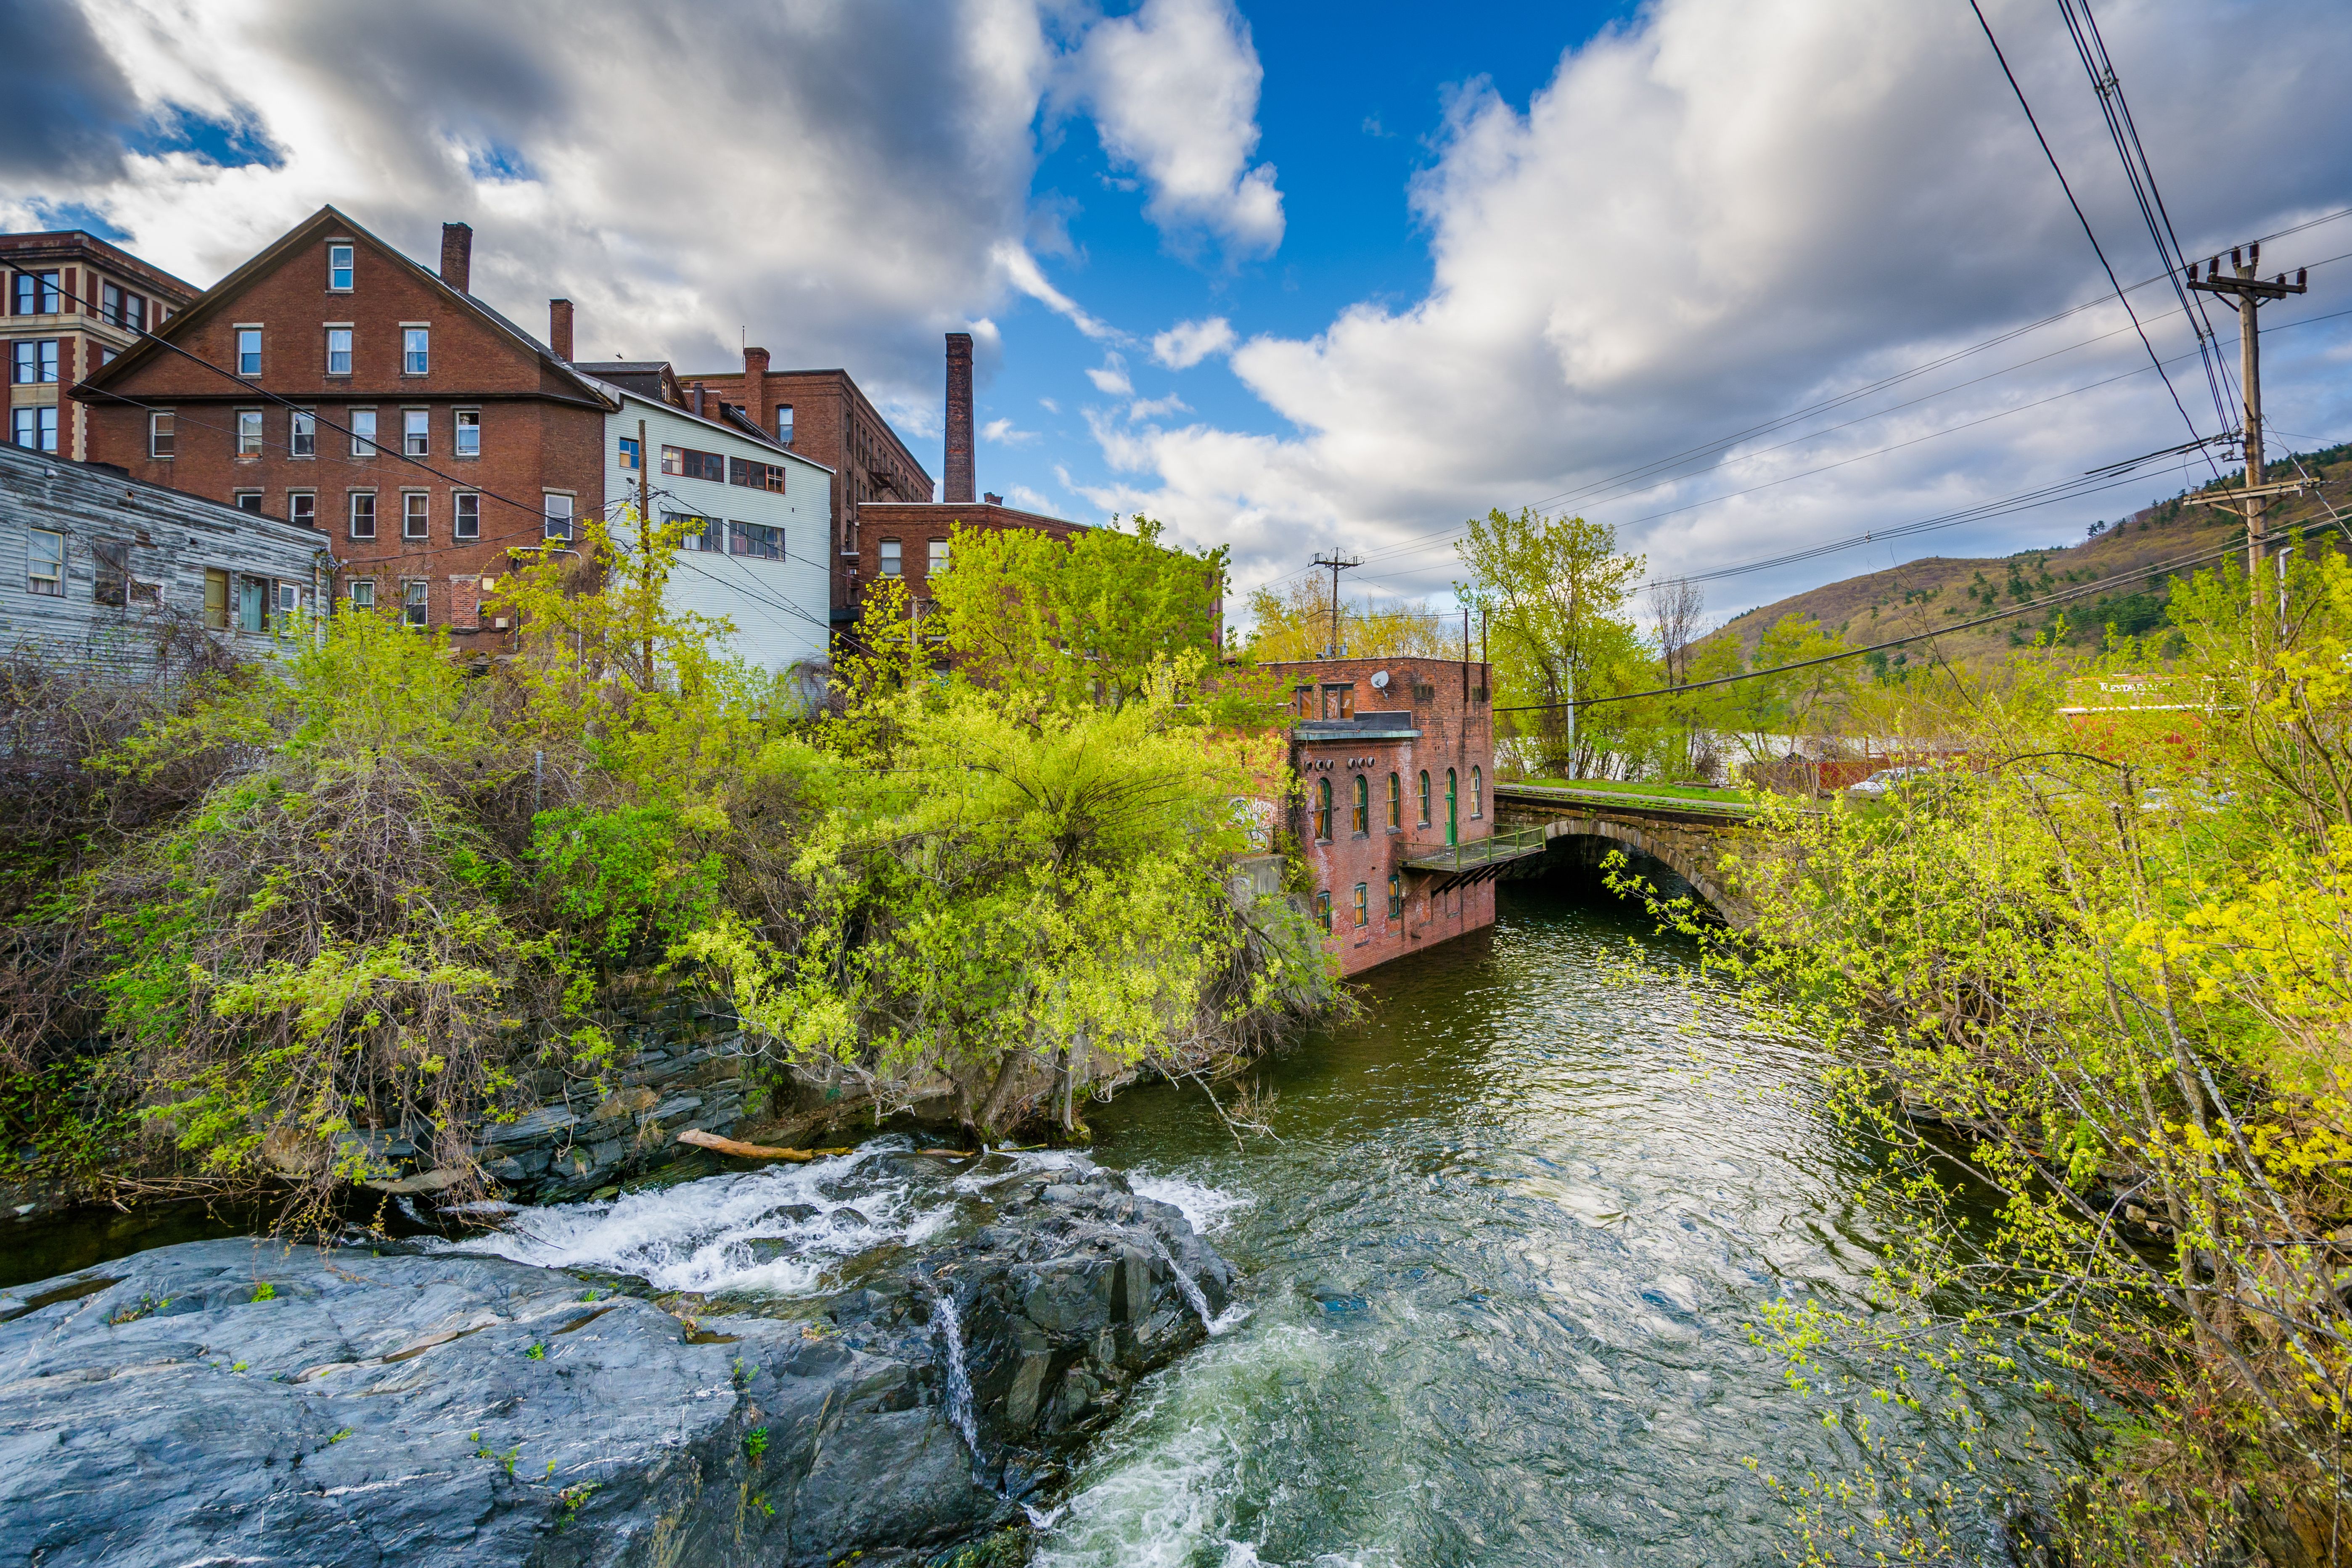 A river running through the town of Brattleboro, Vermont, USA